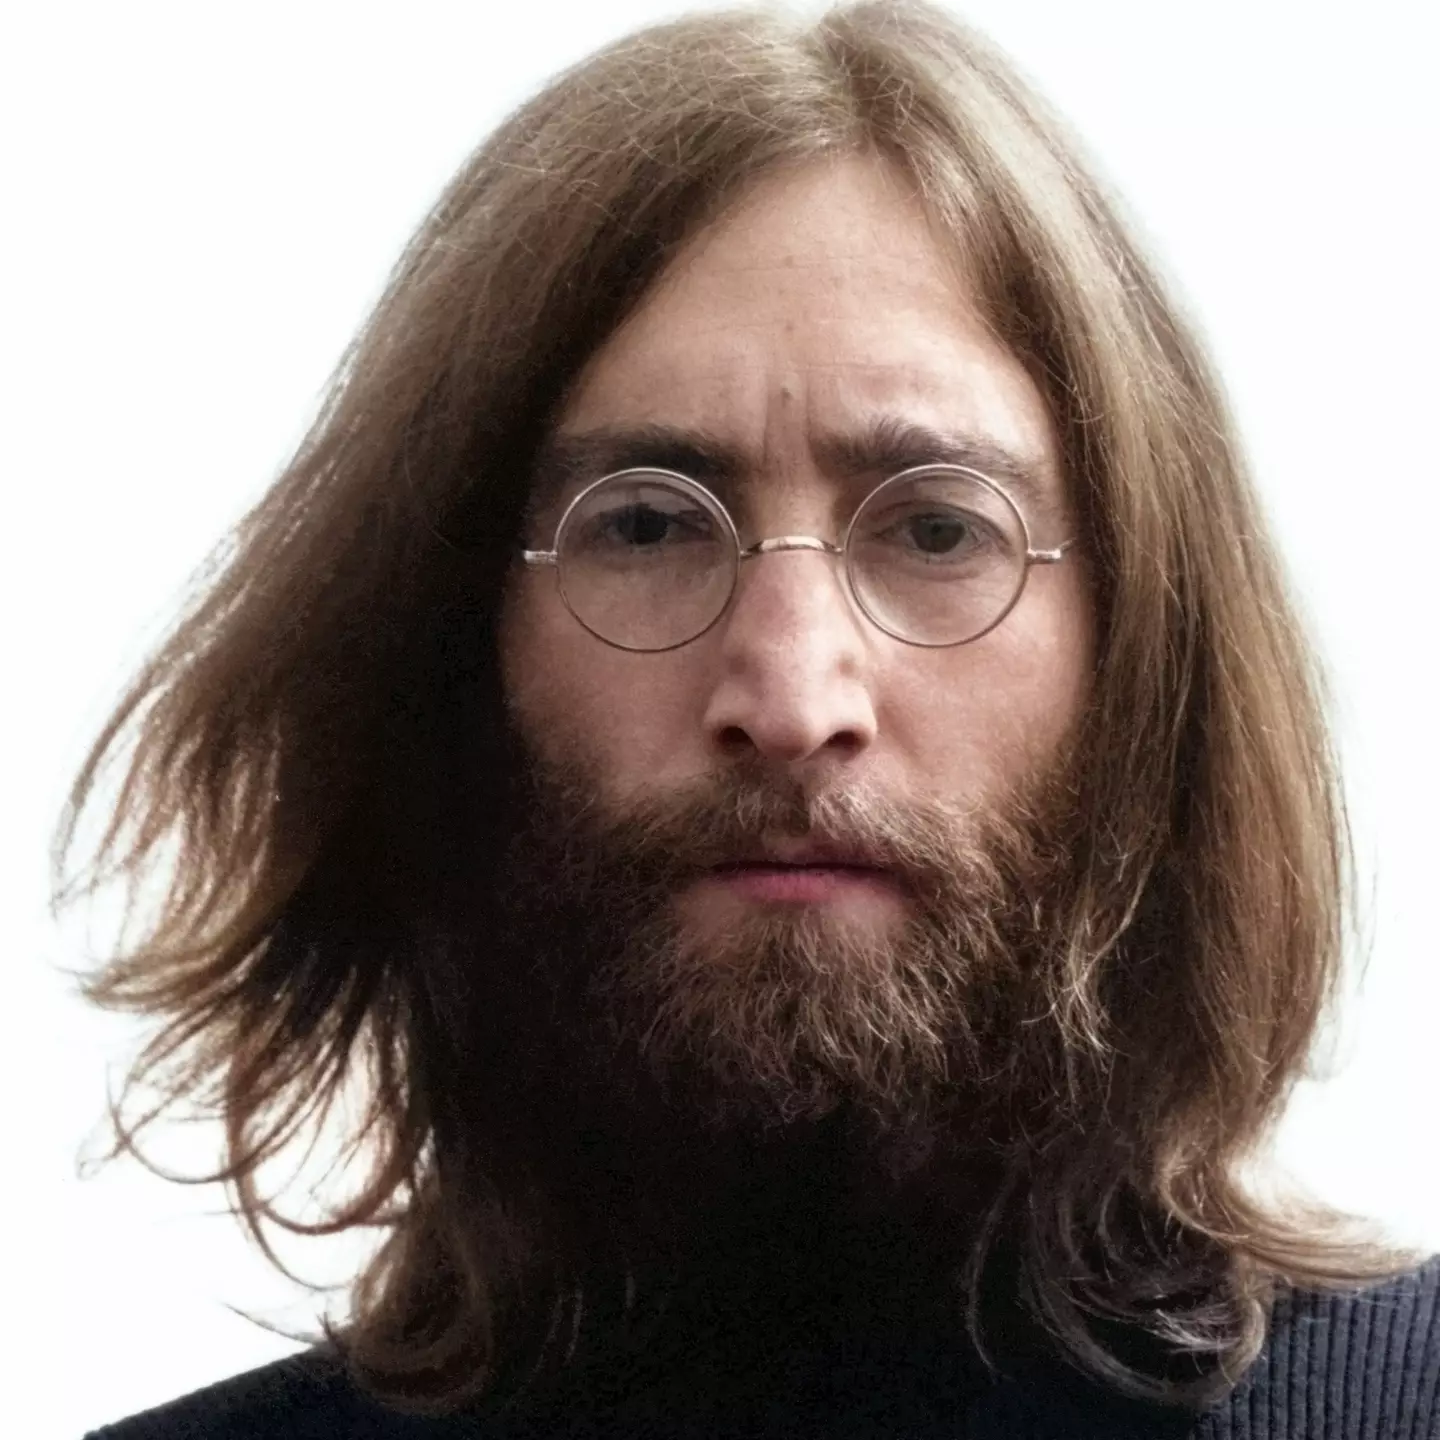 John Lennon was murdered in 1980.